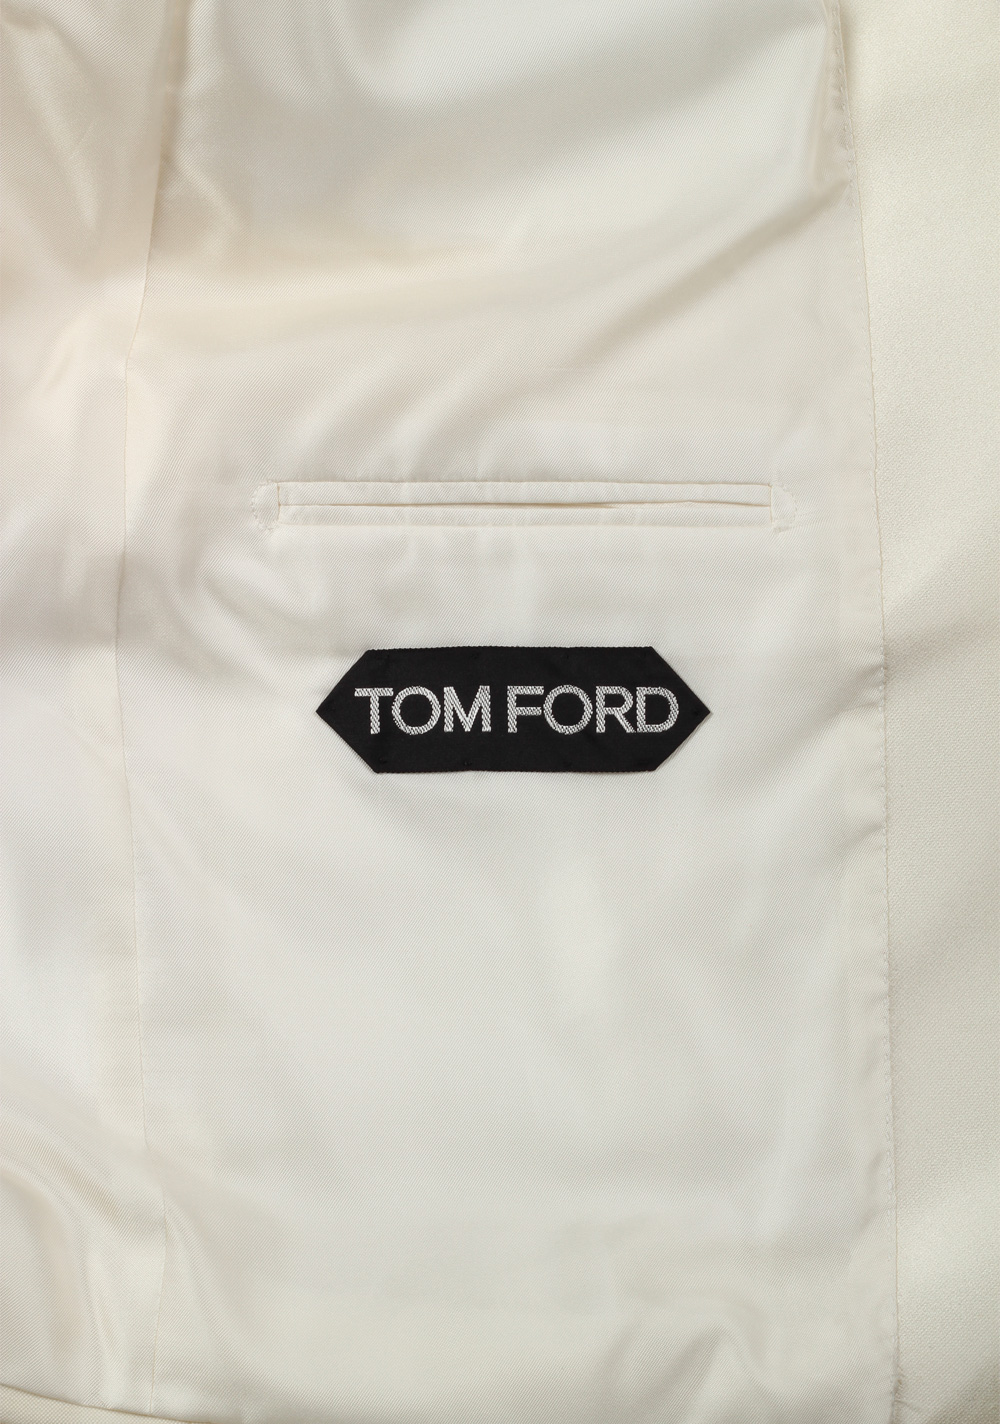 TOM FORD Shelton Ivory Sport Coat Tuxedo Dinner Jacket Size 50 / 40R U.S. | Costume Limité